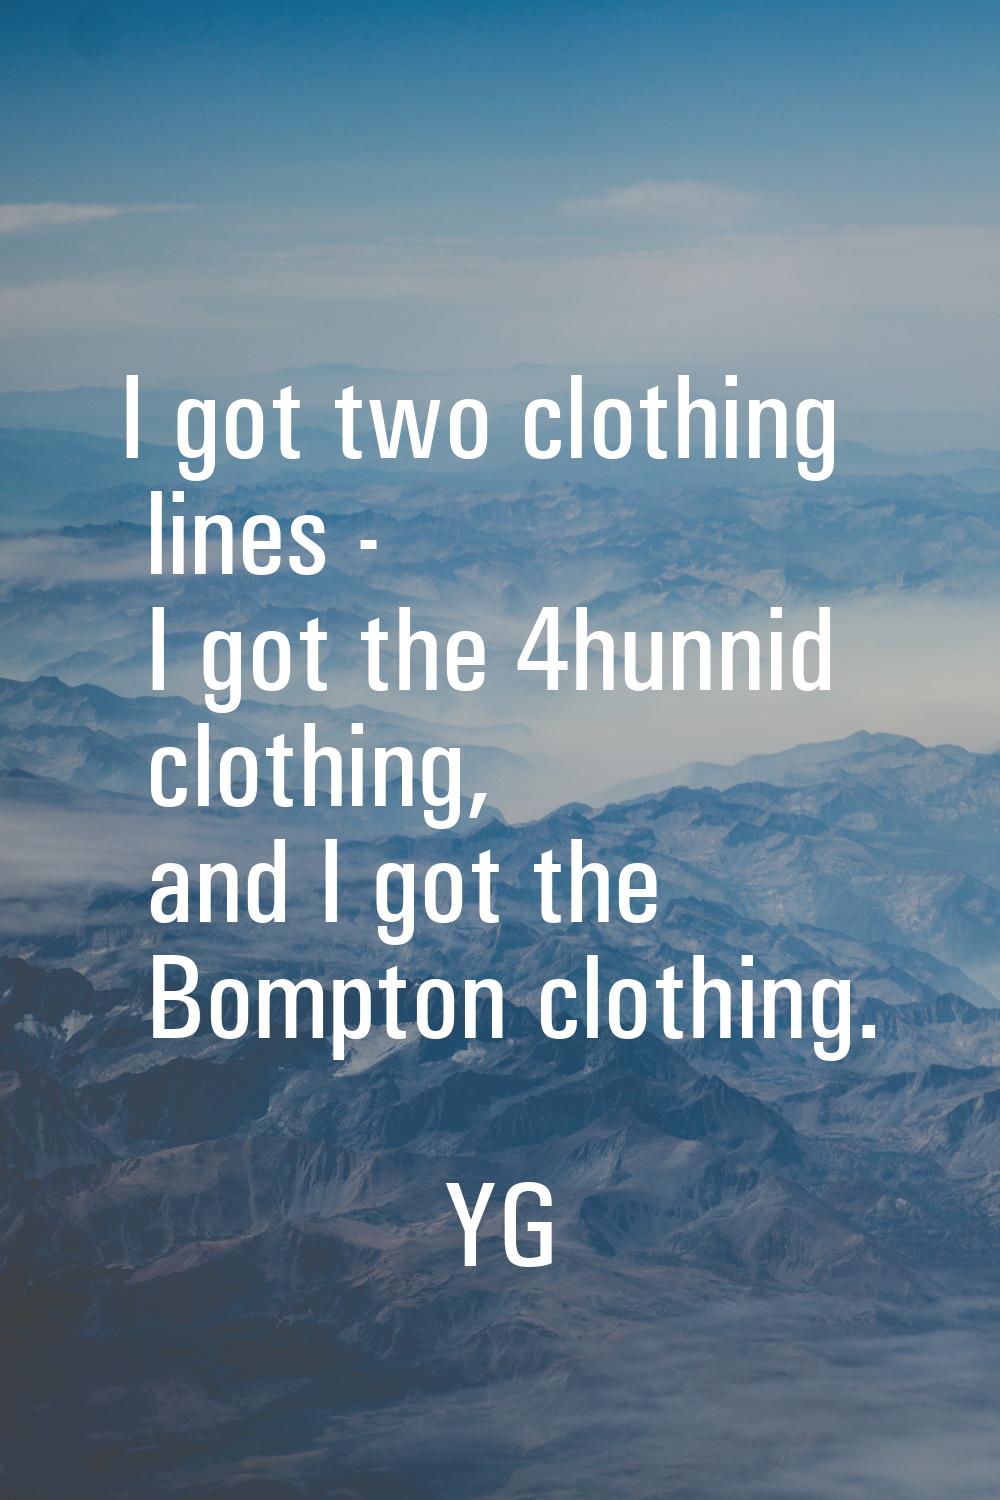 I got two clothing lines - I got the 4hunnid clothing, and I got the Bompton clothing.